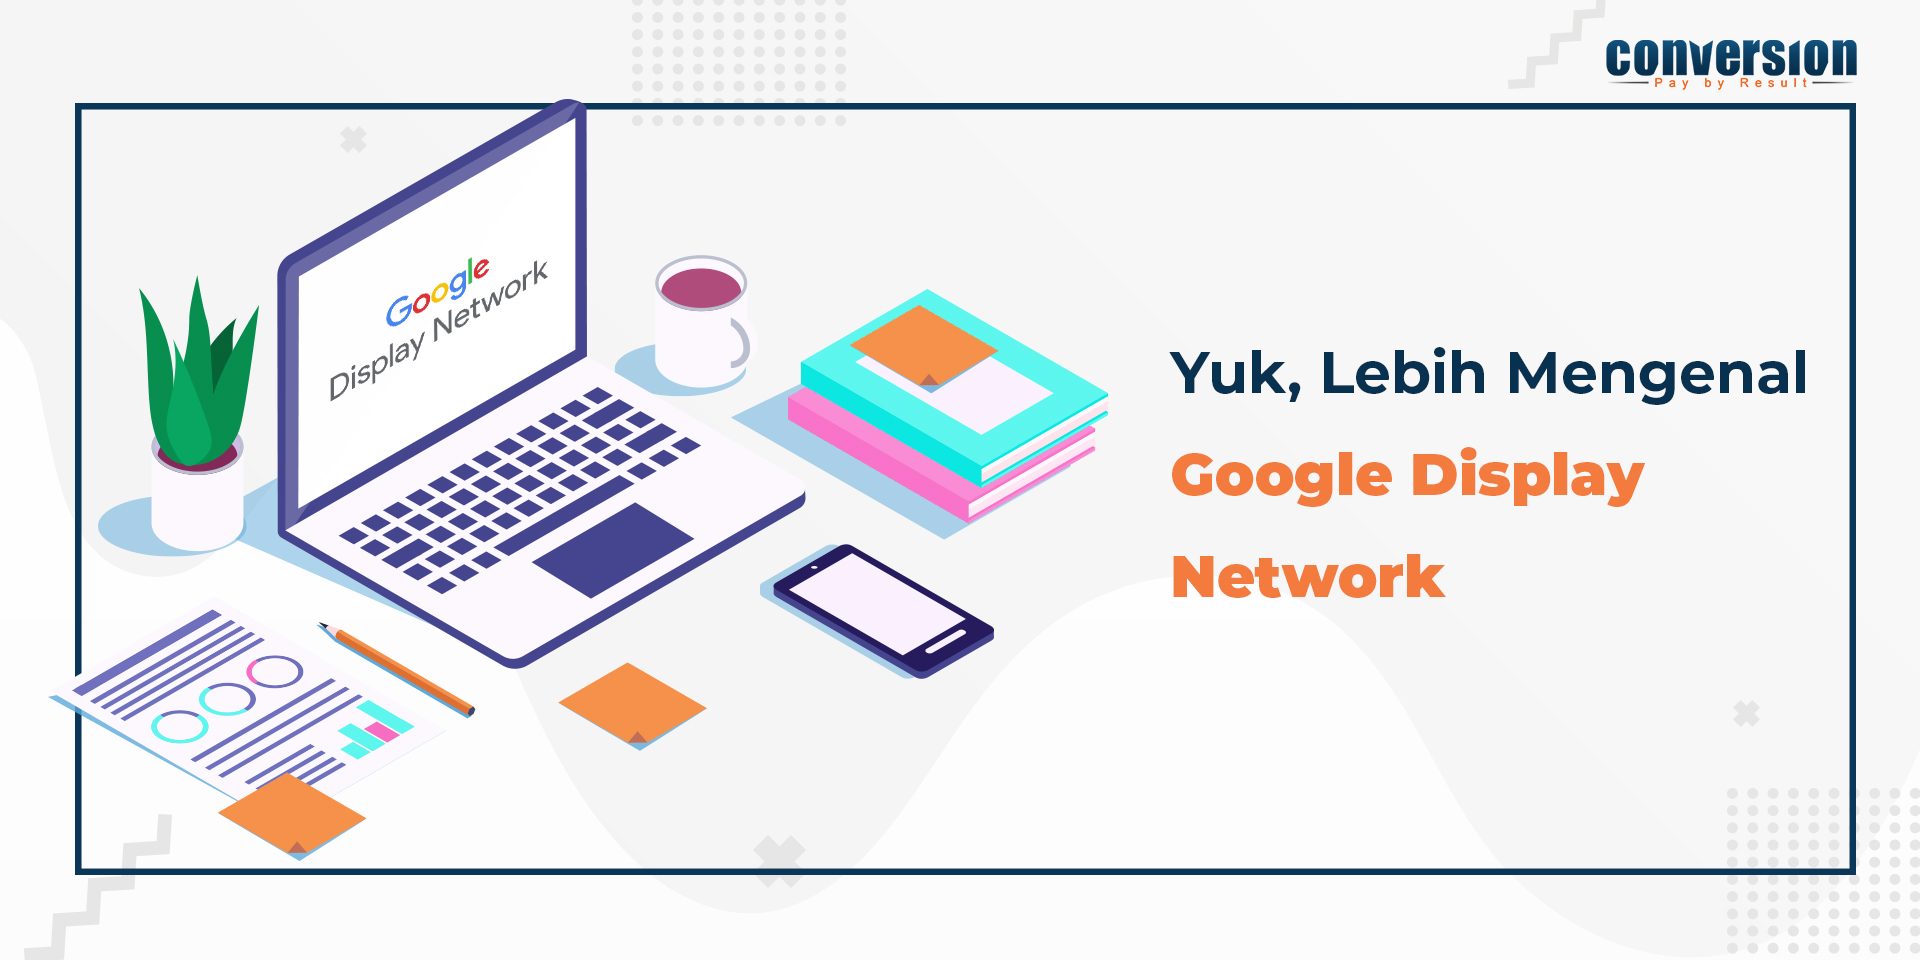 Yuk, Lebih Mengenal Google Display Network